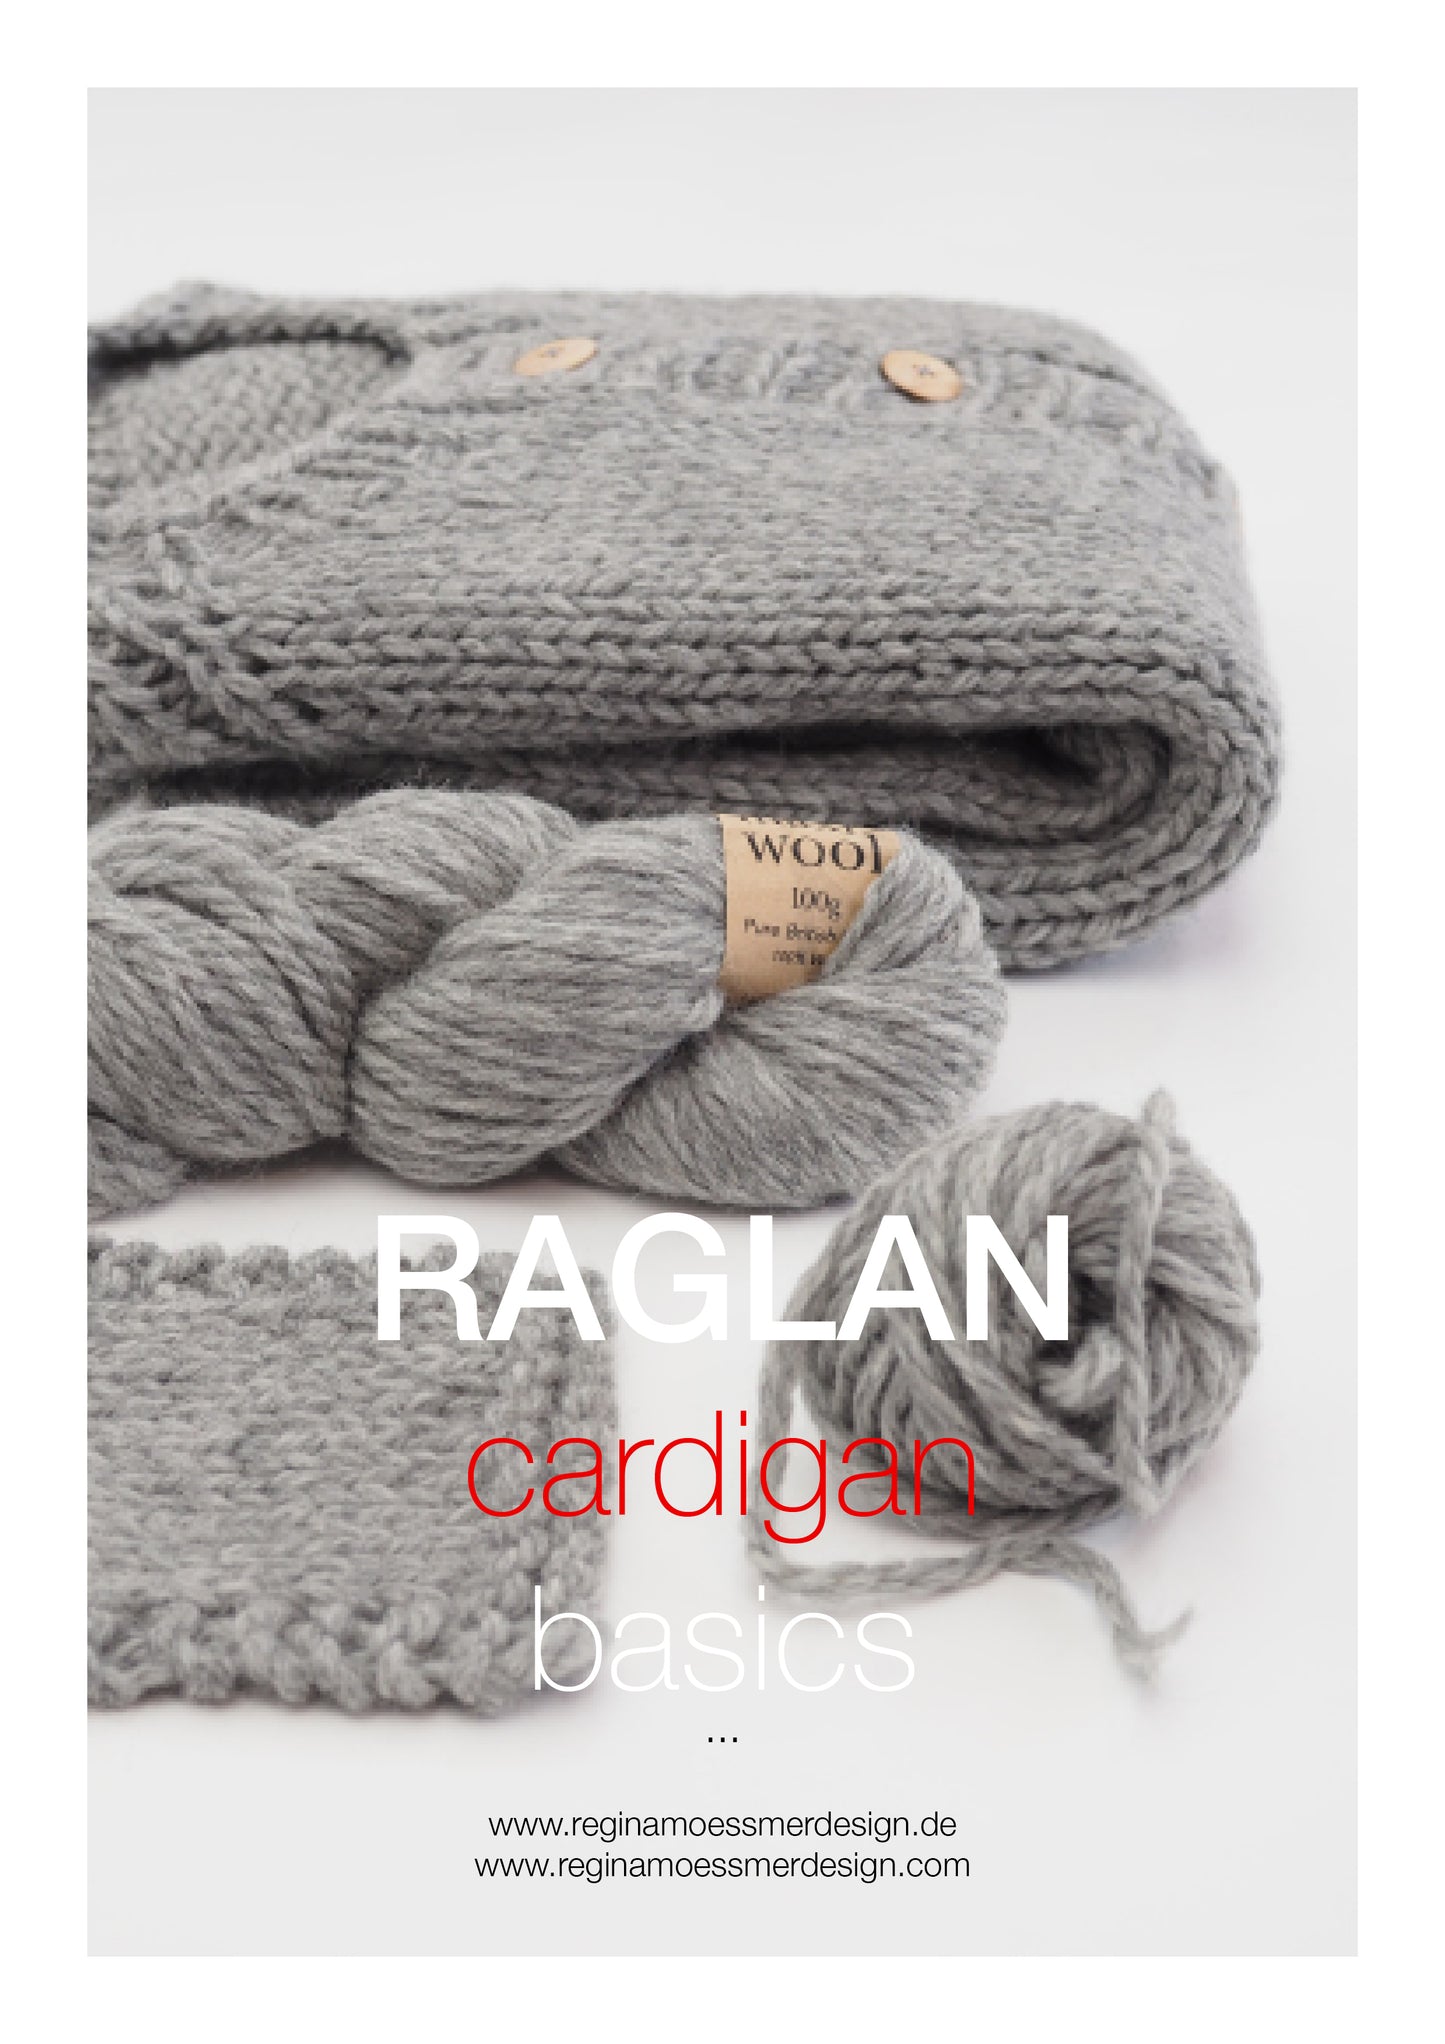 RAGLAN cardigan basics - German edition only.